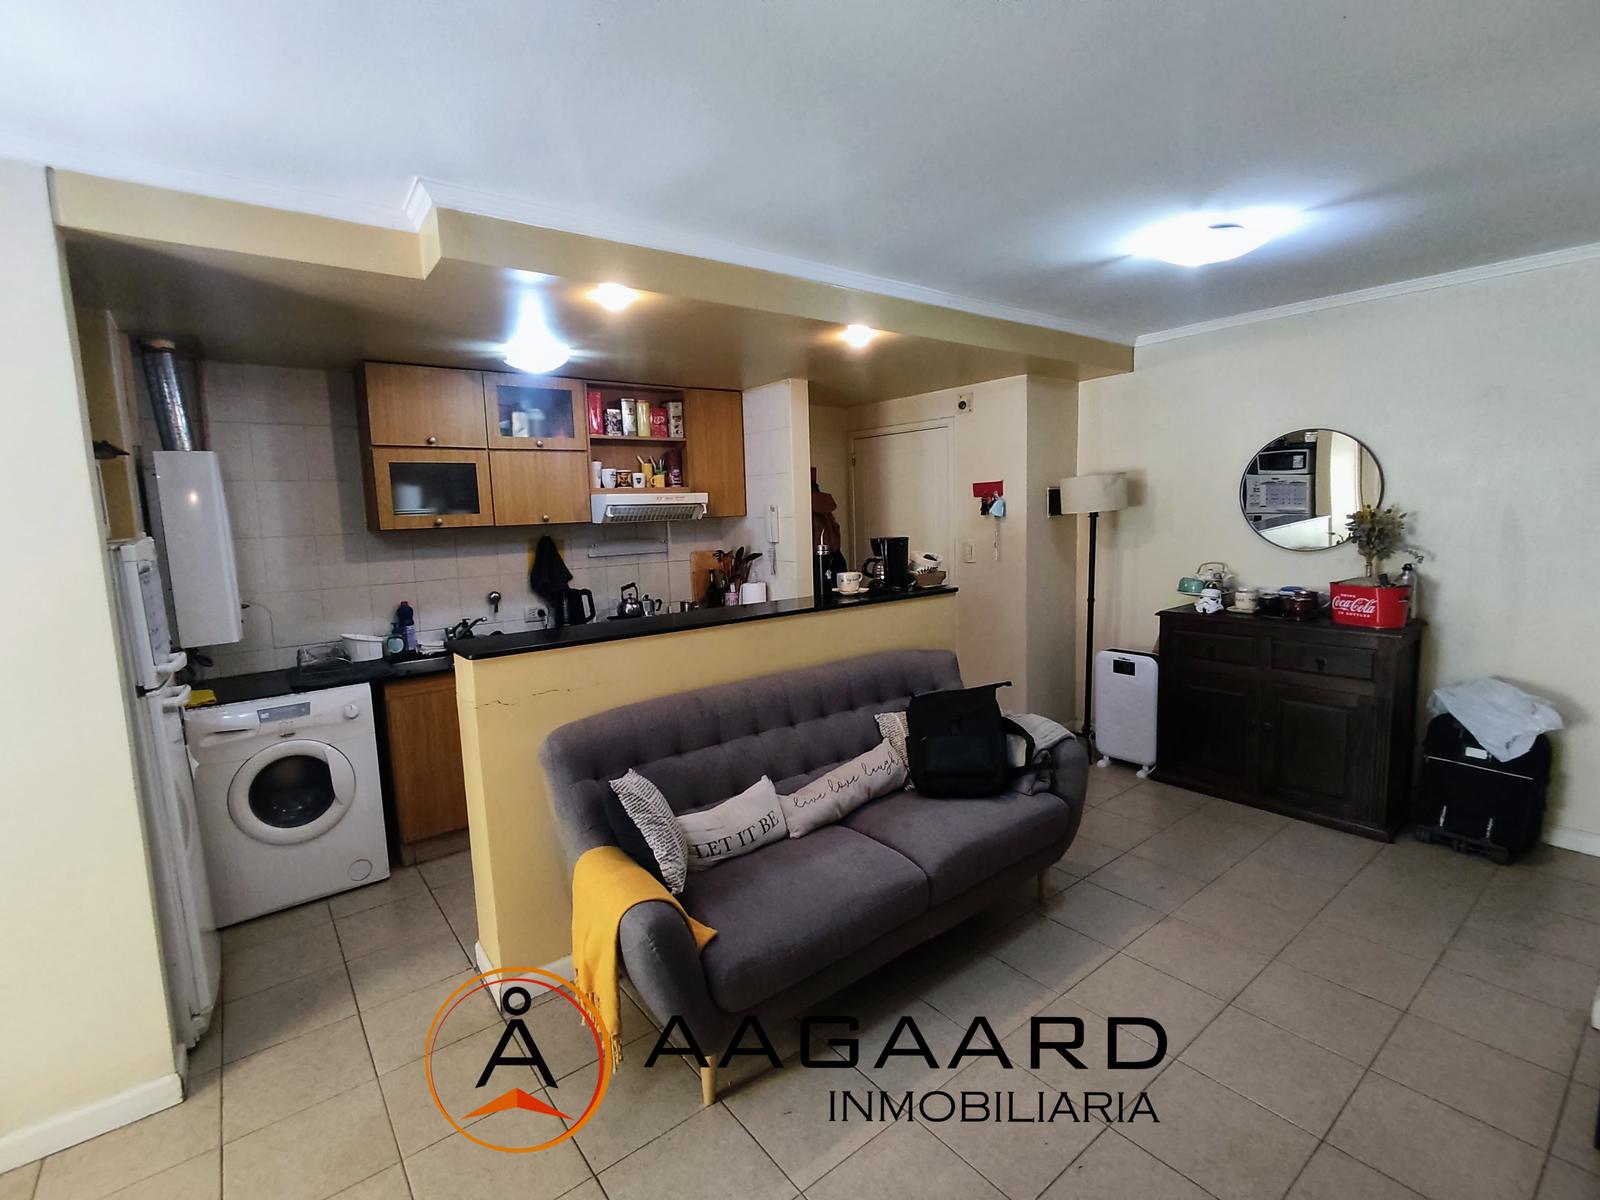 #4946342 | Sale | Apartment | Nueva Cordoba (AAGAARD INMOBILIARIA)